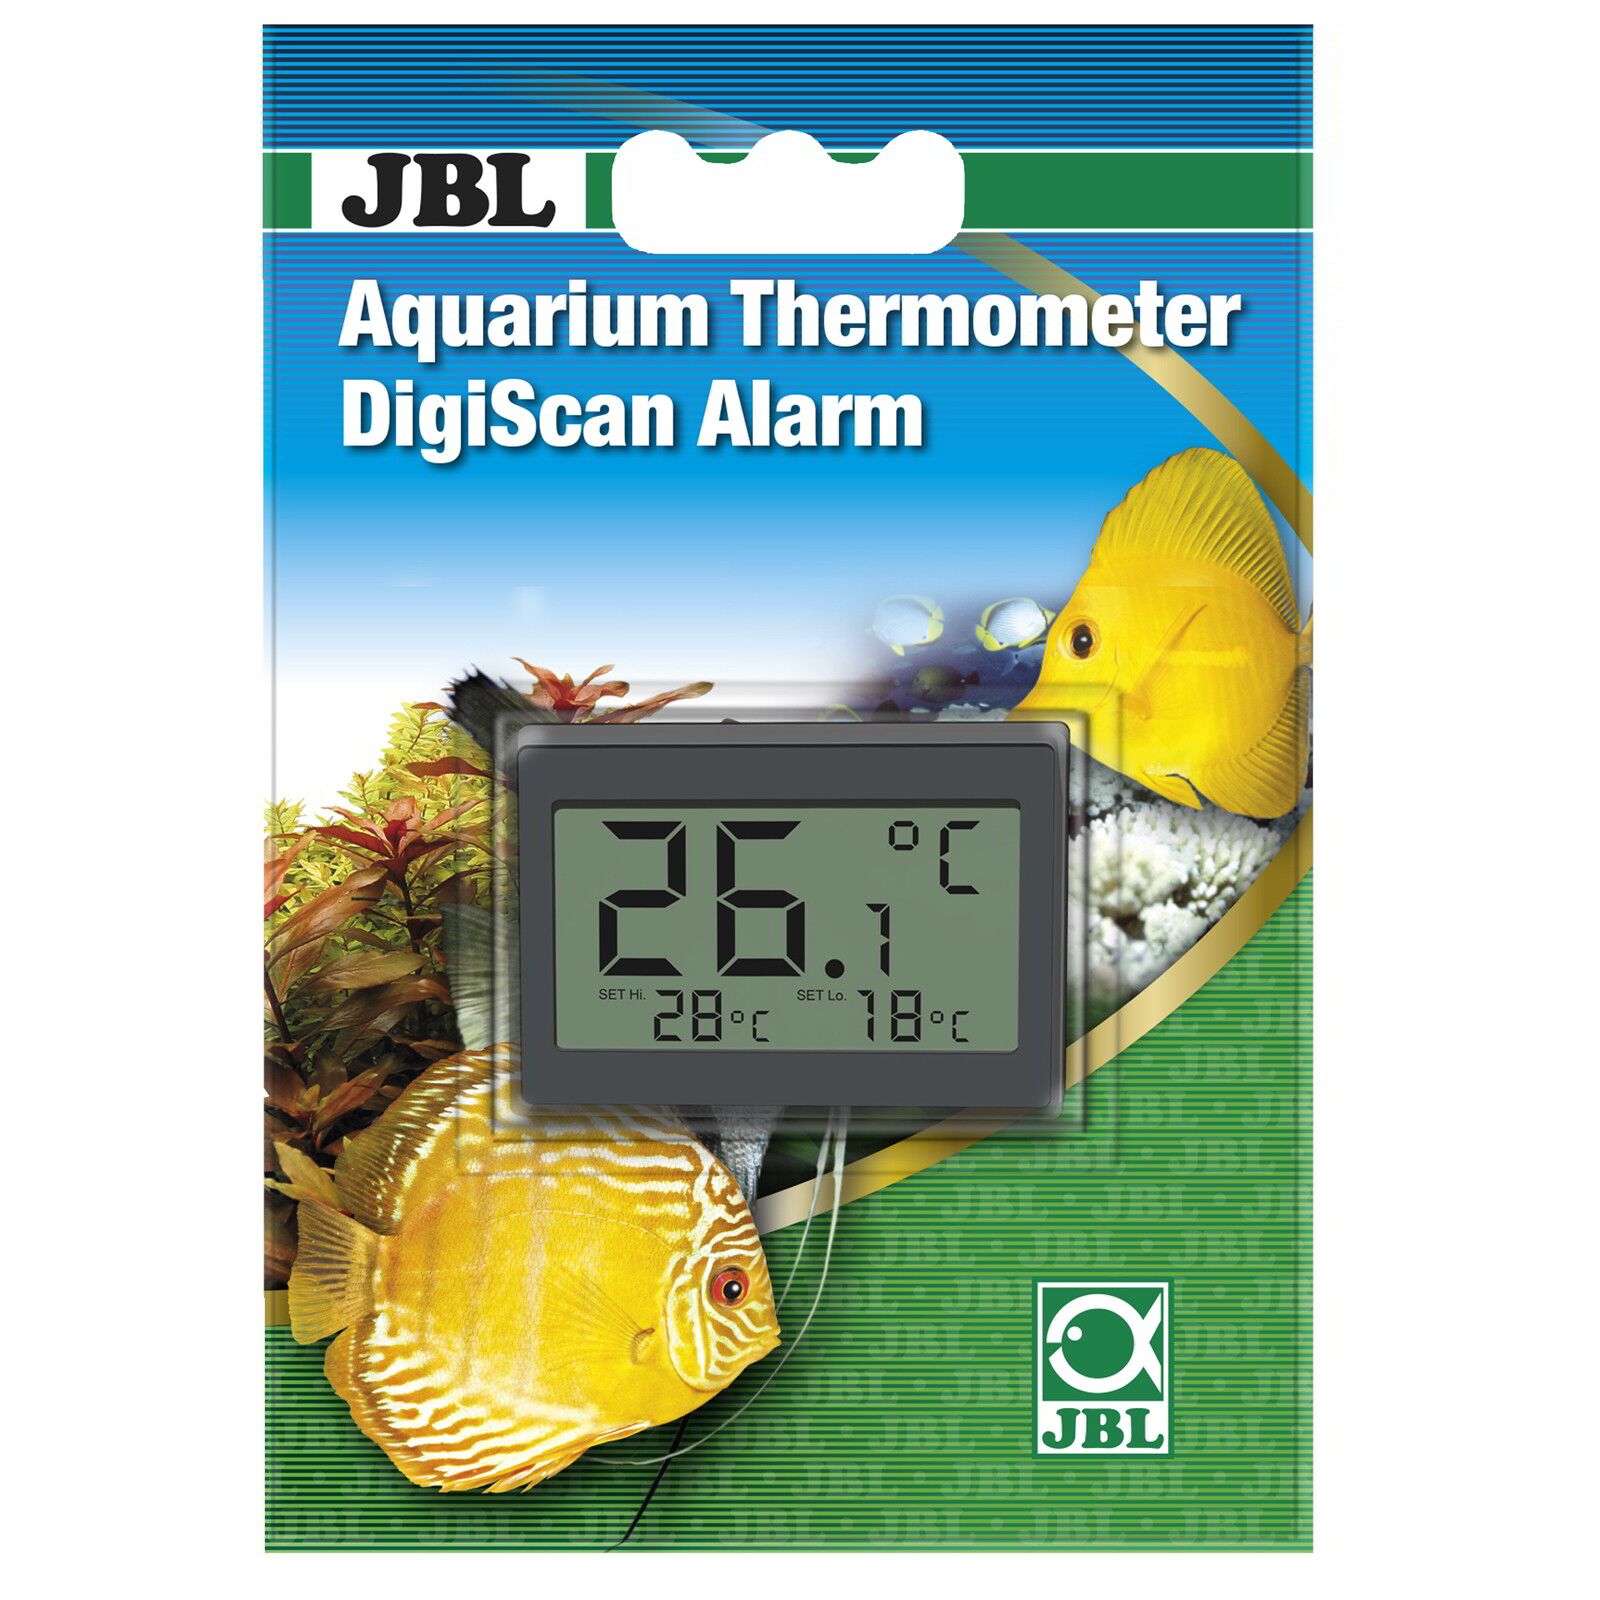 https://www.aquasabi.com/media/image/product/20440/lg/jbl-aquarium-thermometer-digiscan-alarm.jpg